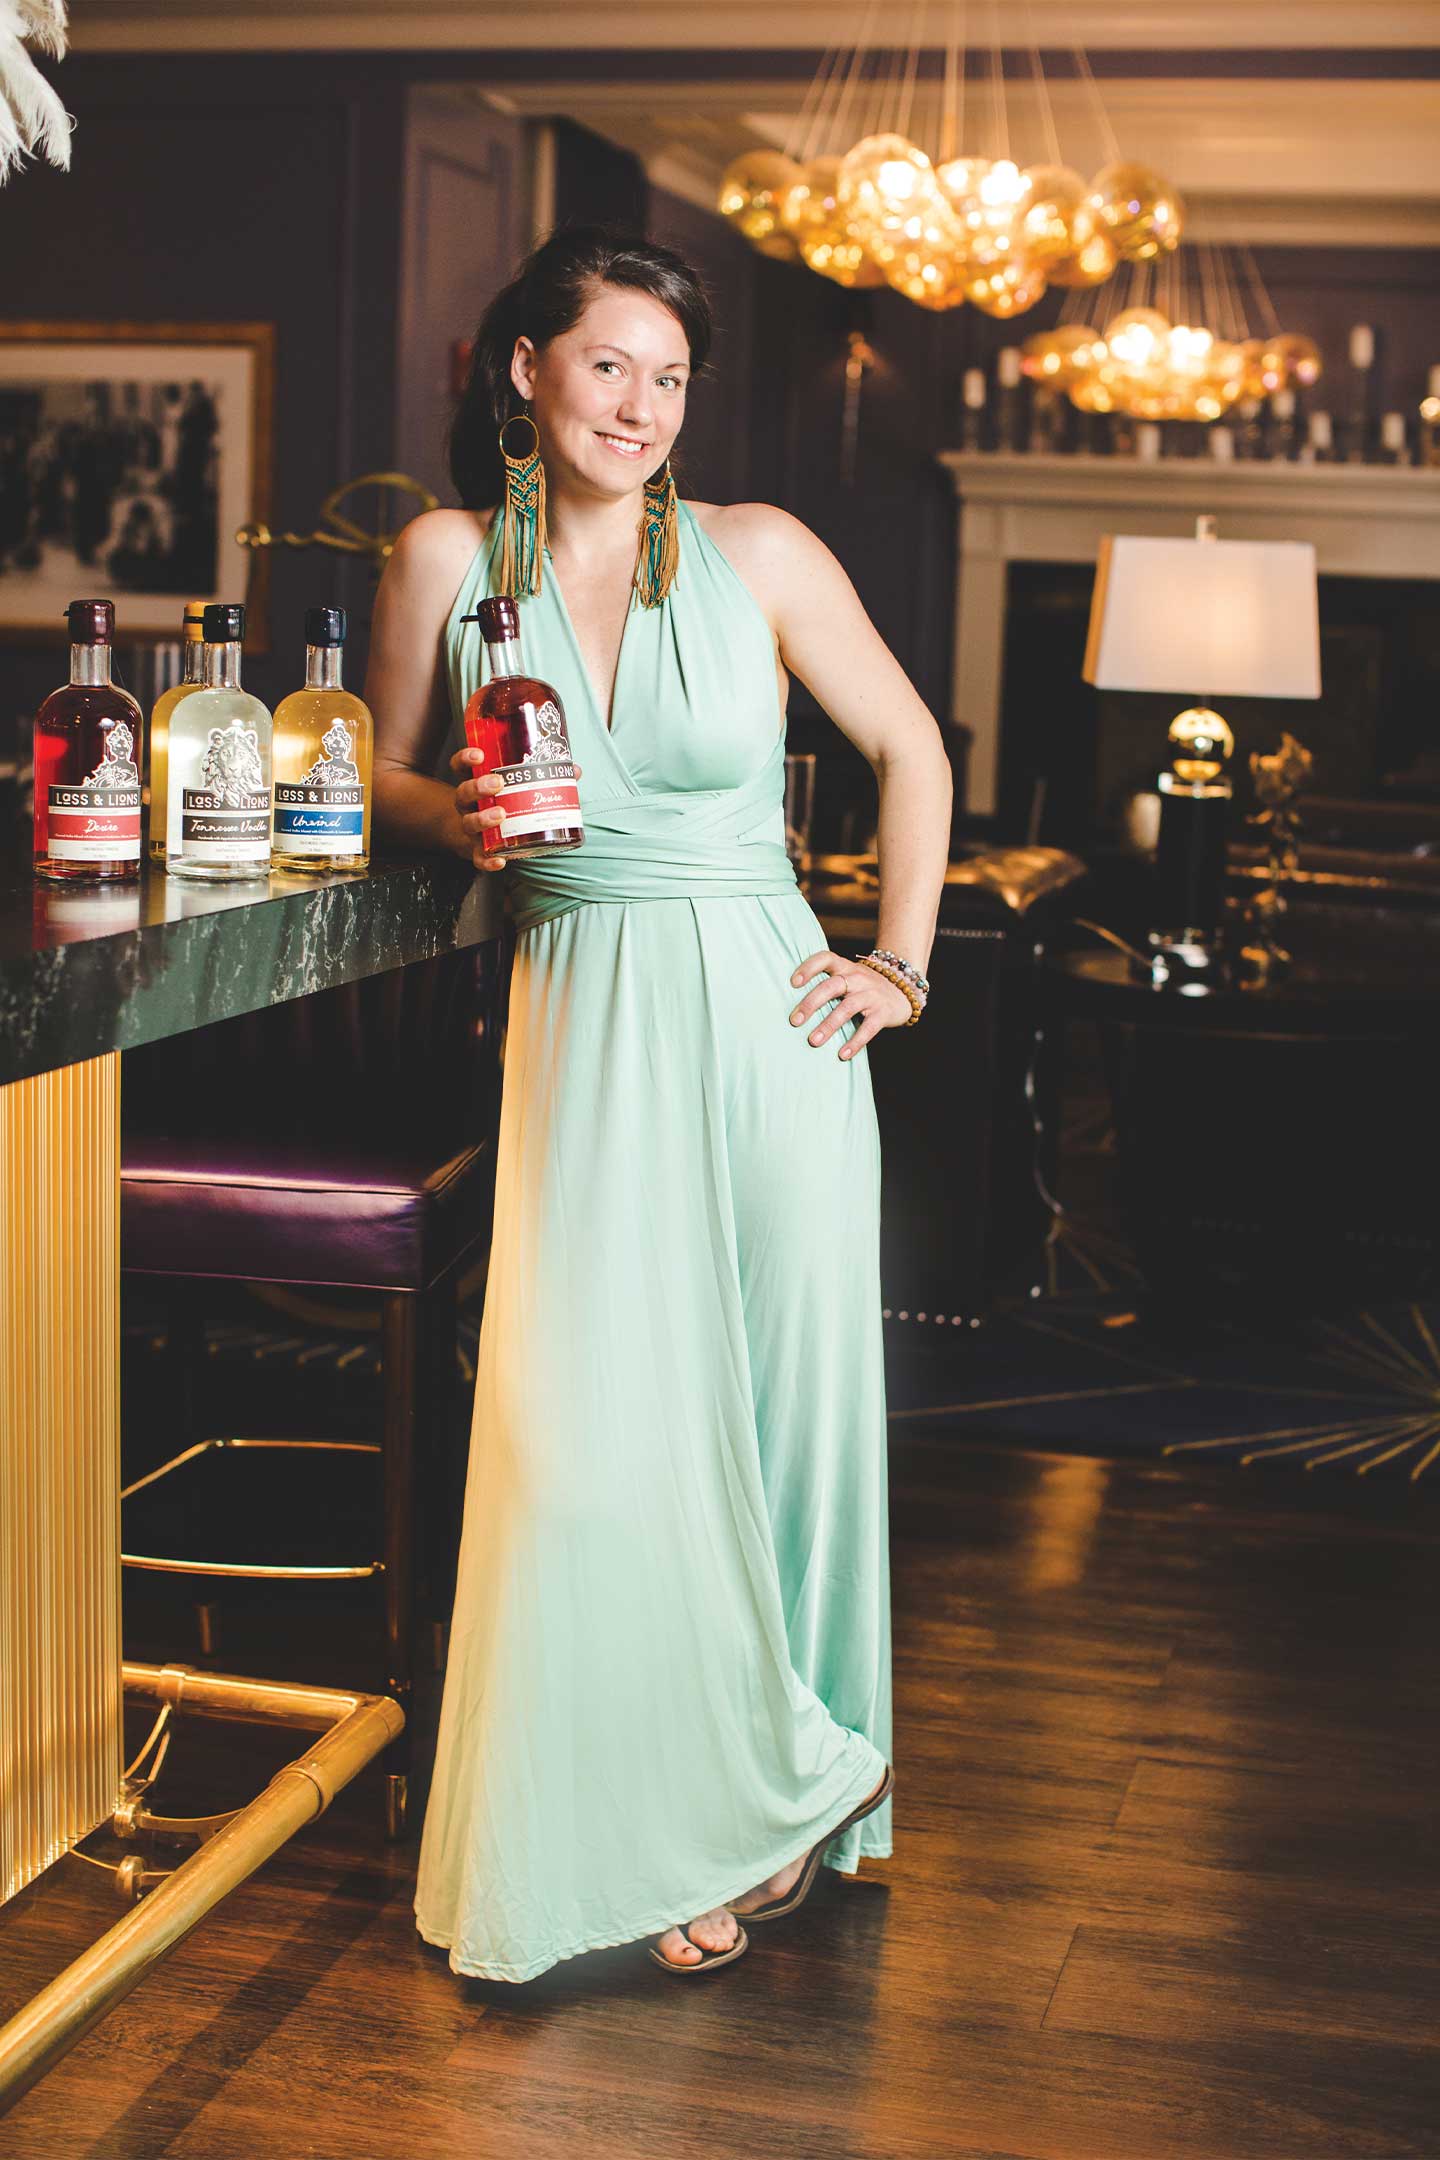 Danette Newton chattanooga business woman of Lass & Lions vodka